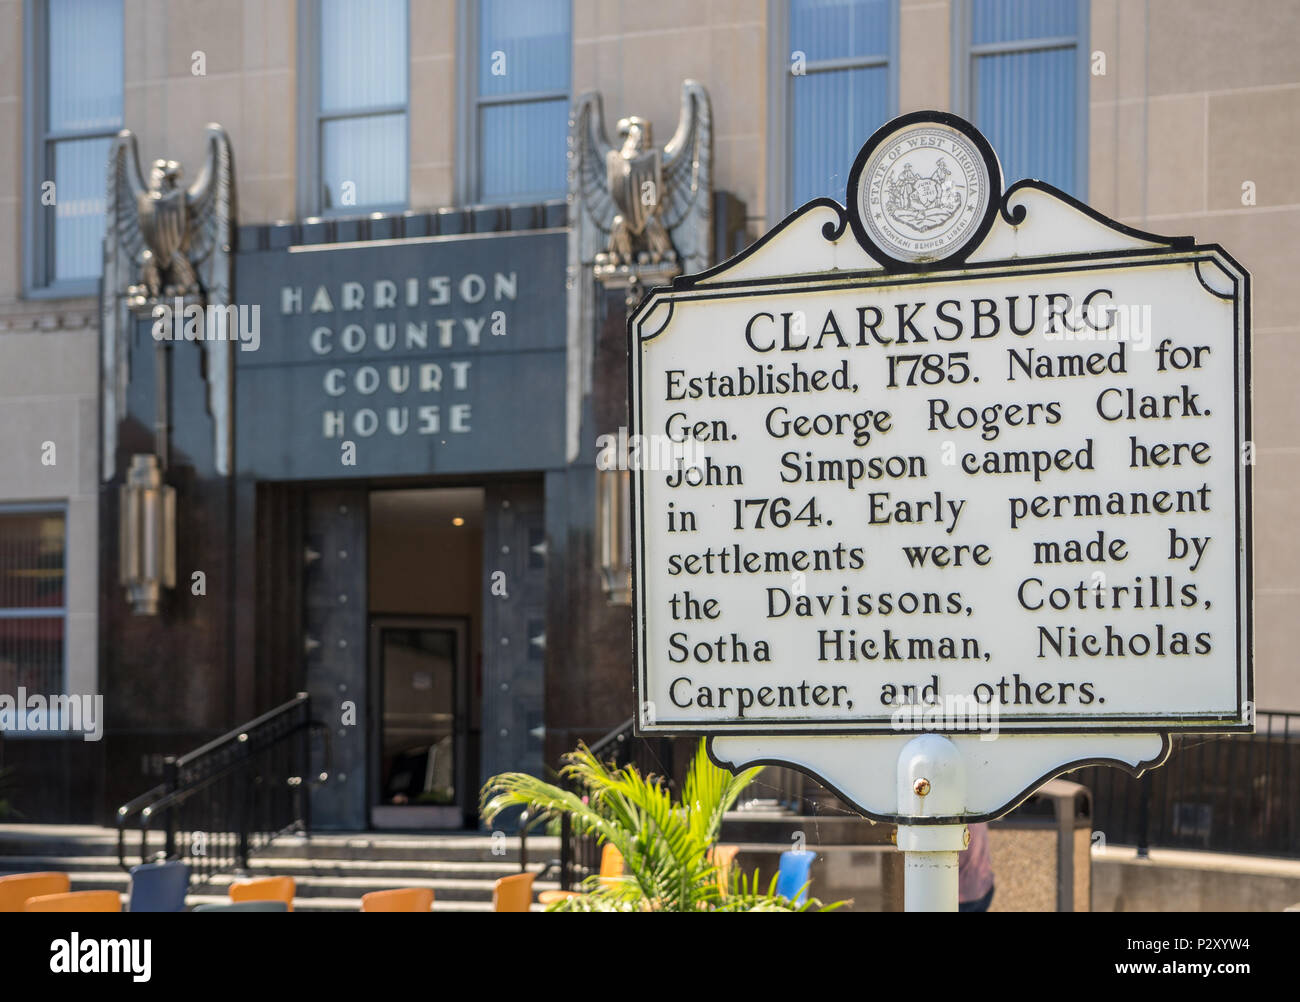 County Court House in Clarksburg West Virginia Stock Photo